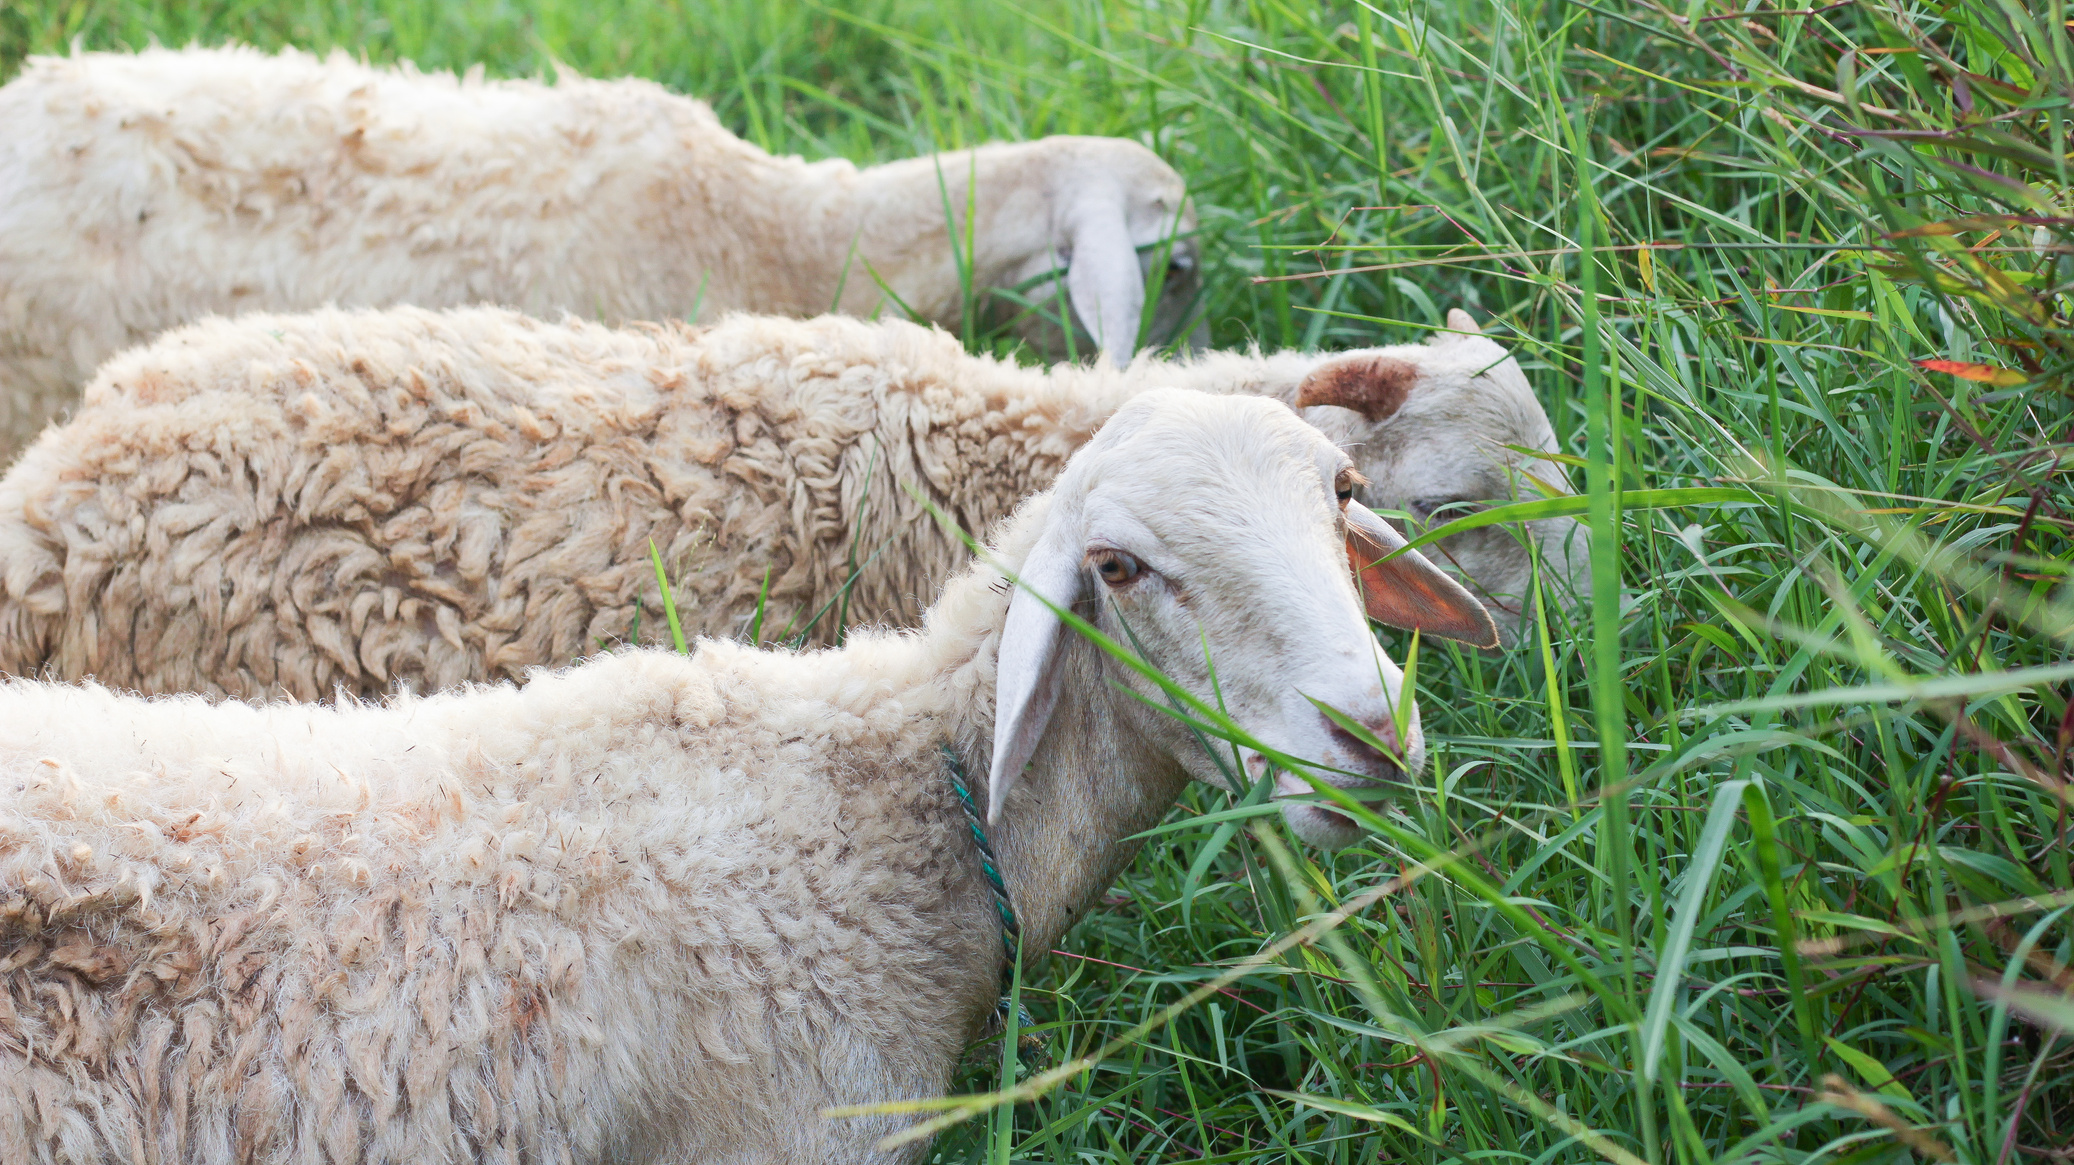 Three sheep eat grass in fields